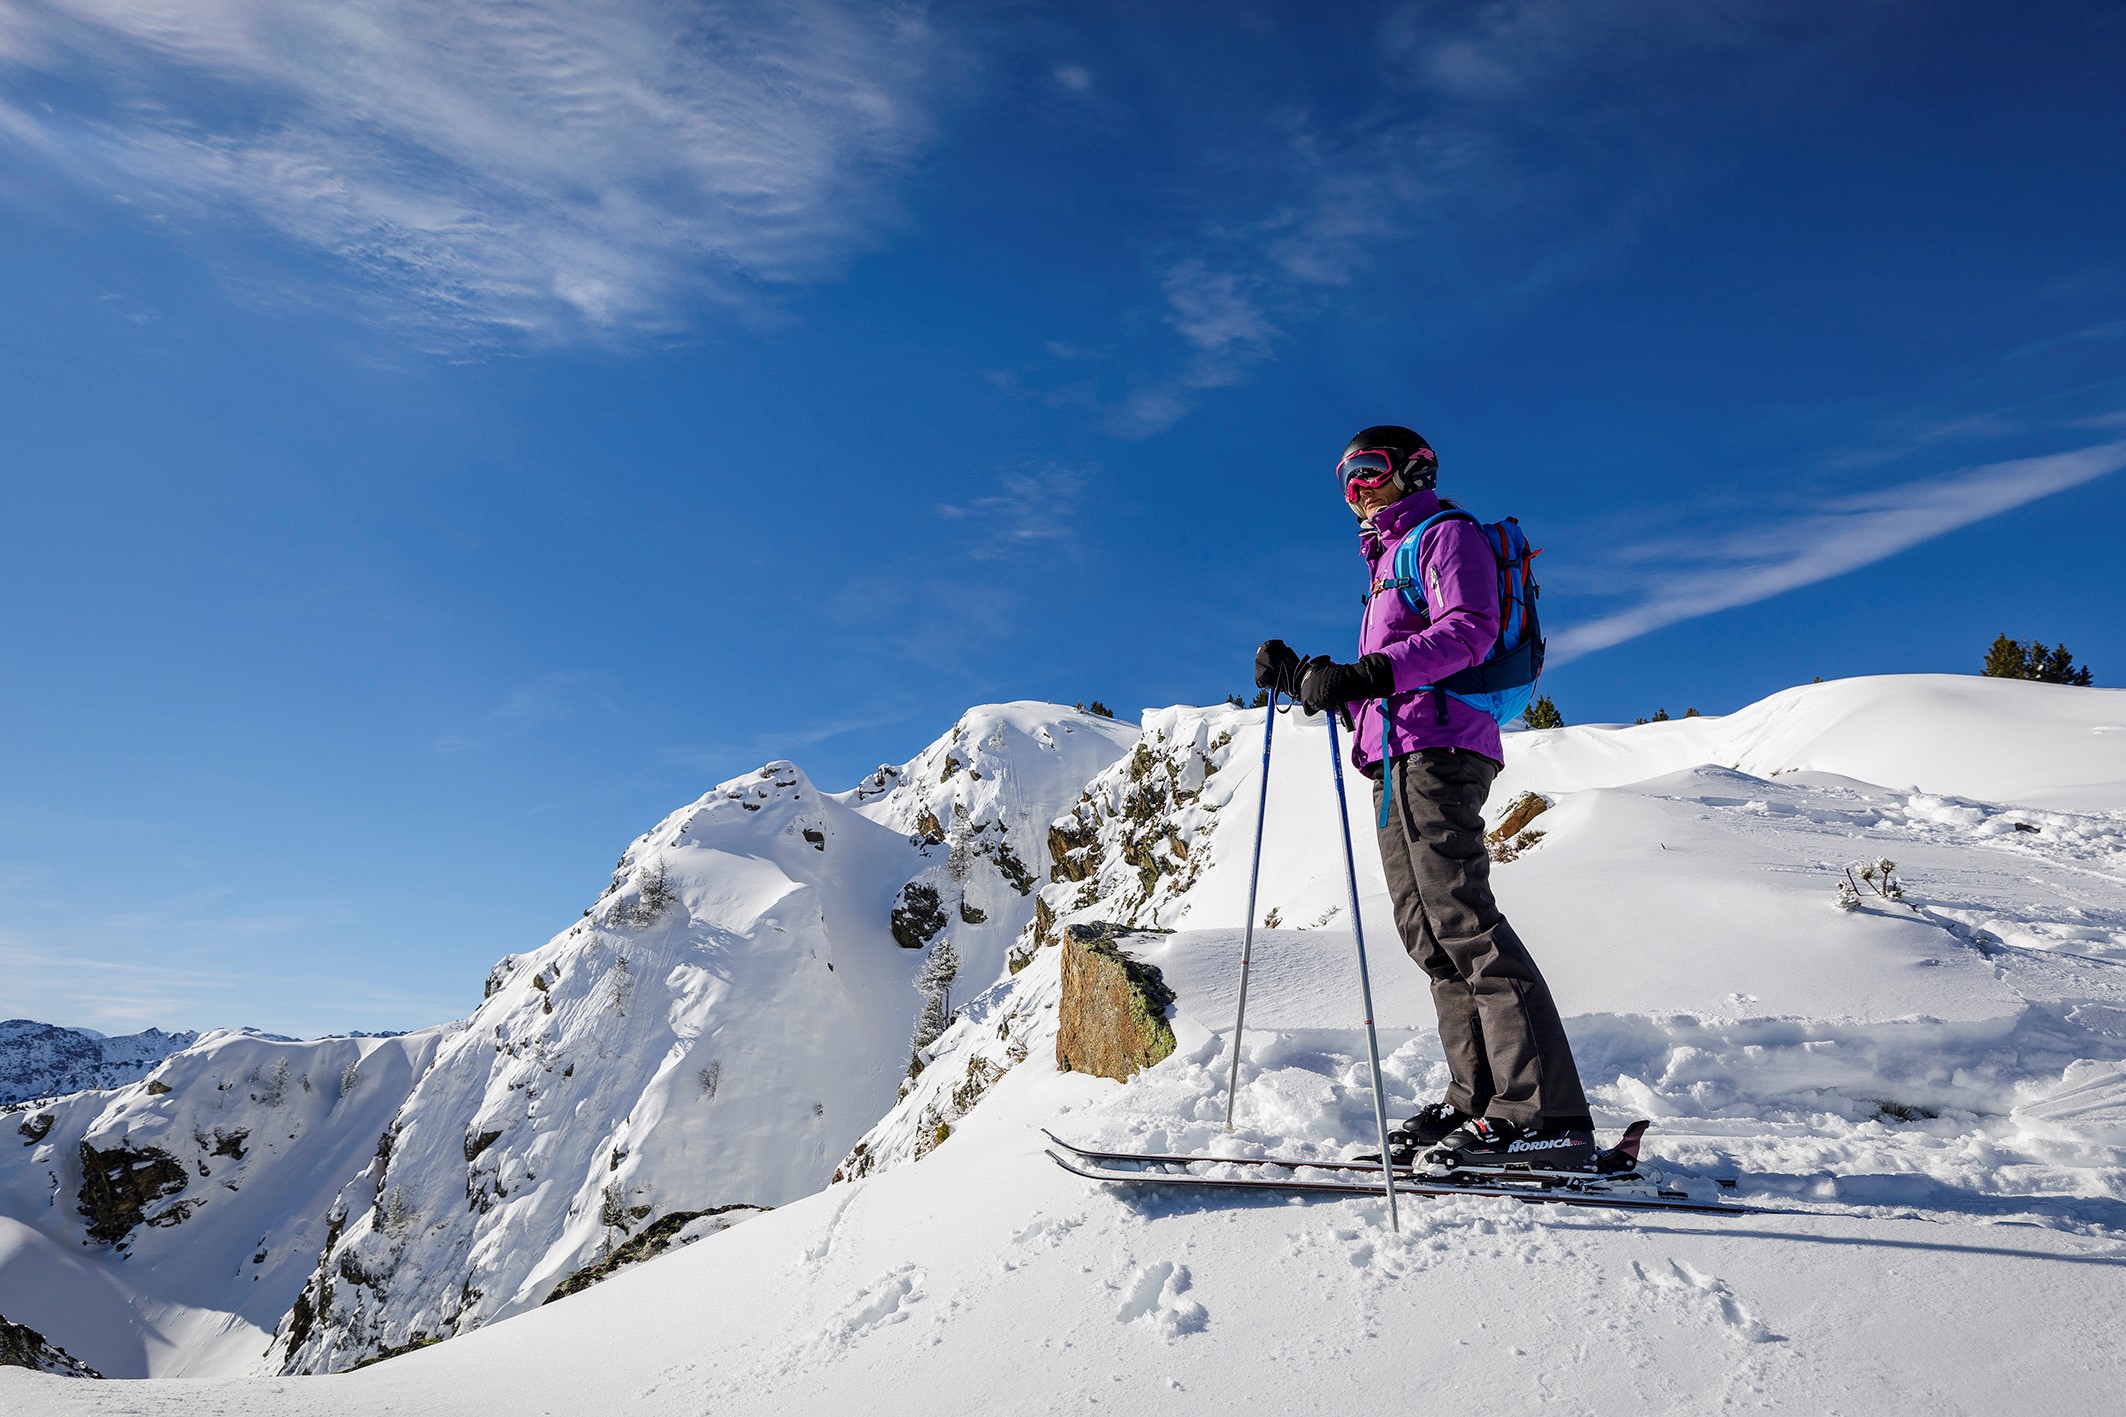 Lanzan Skizam, la nueva tarjeta del Pirineo francés para esquiar en 300 Km